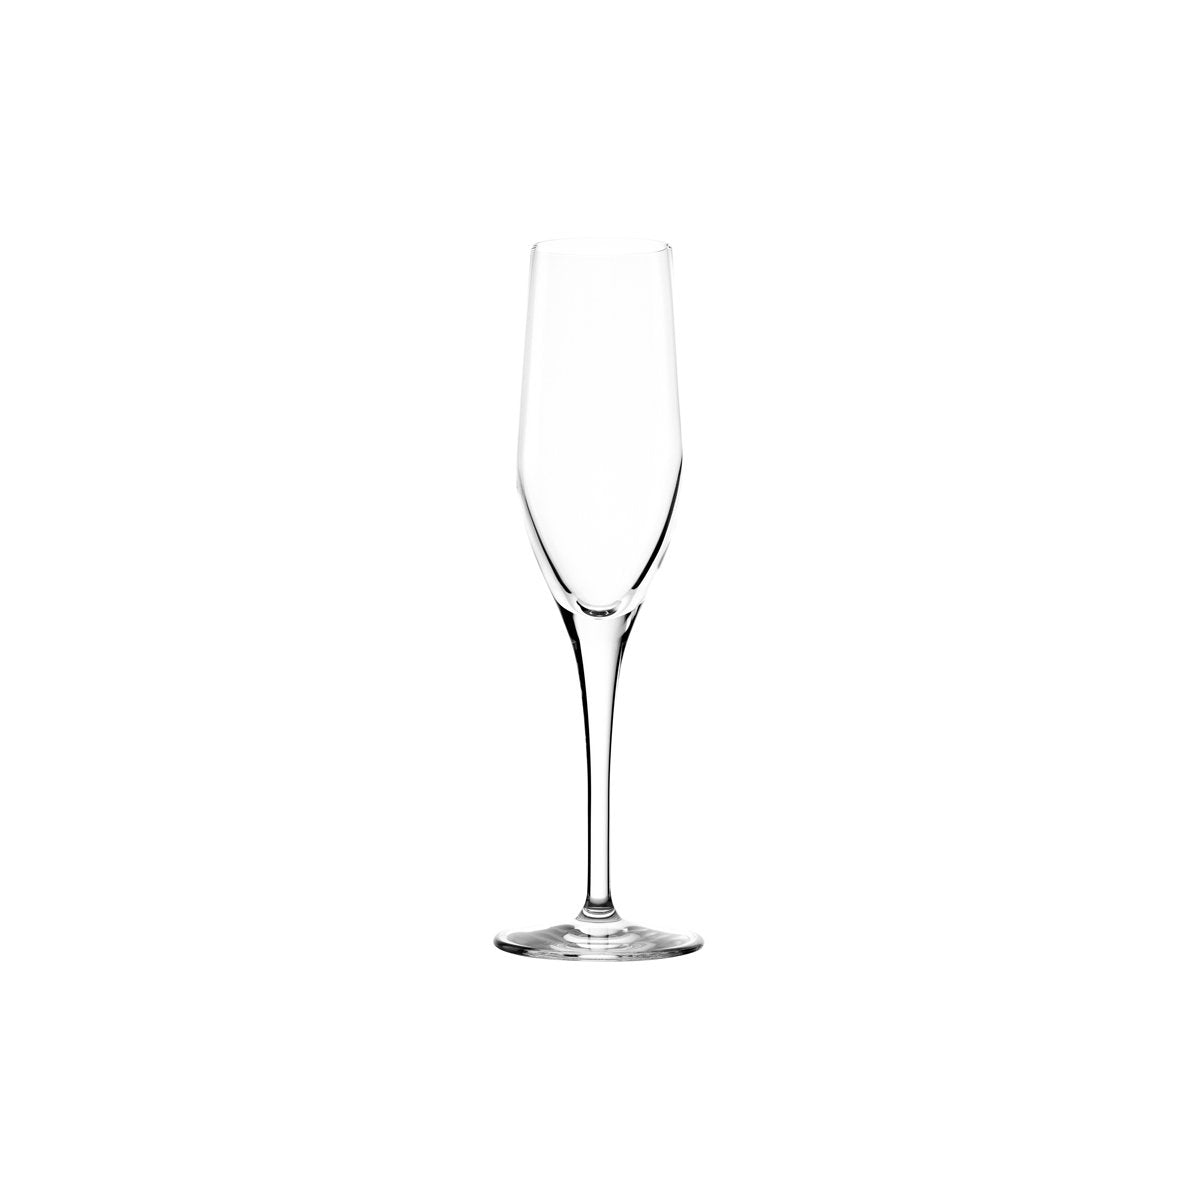 360-808 Stolzle Exquisit Champagne Flute 175ml Tomkin Australia Hospitality Supplies